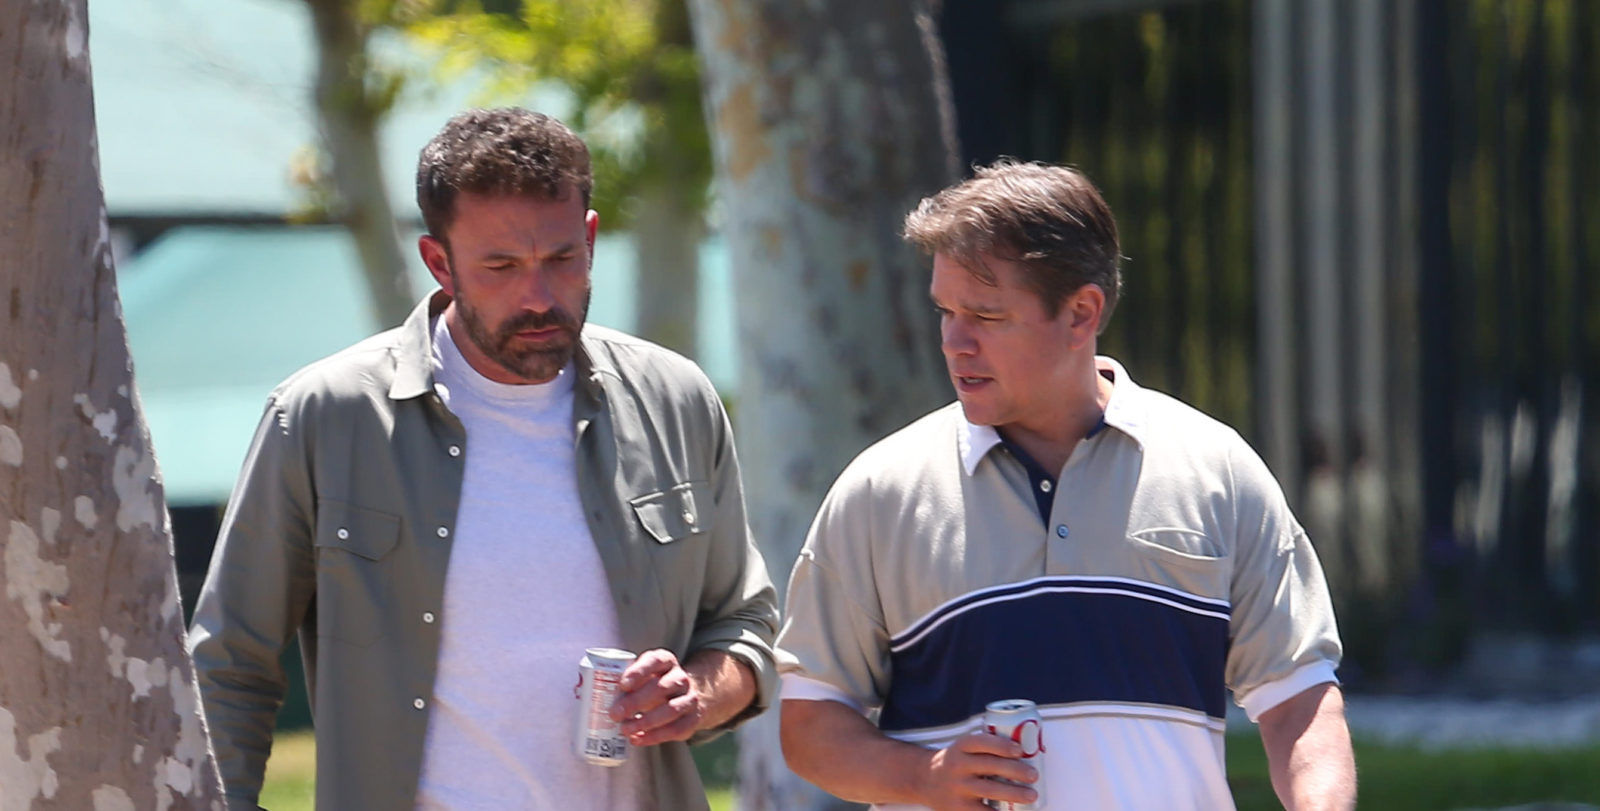 Ben Affleck and Matt Damon team up for a film on Nike’s Michael Jordan pursuit